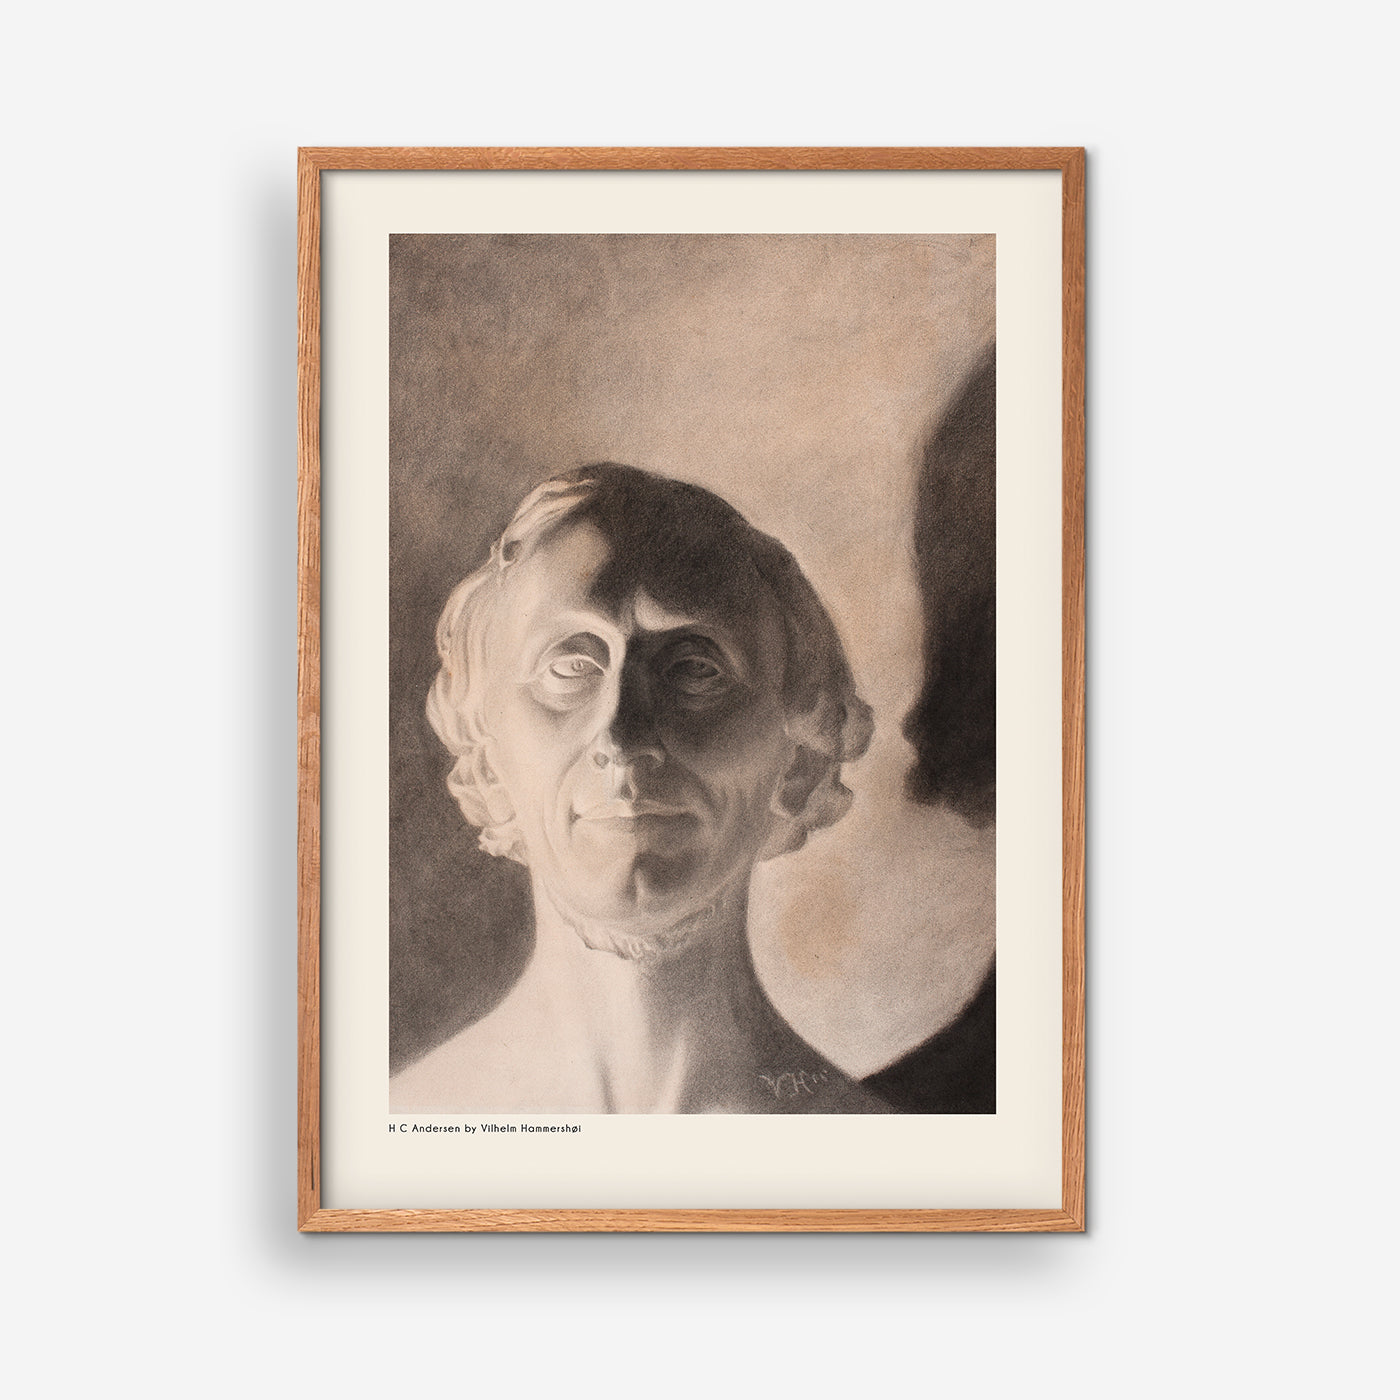 HC Andersen portrait bust - Vilhelm Hammershøi